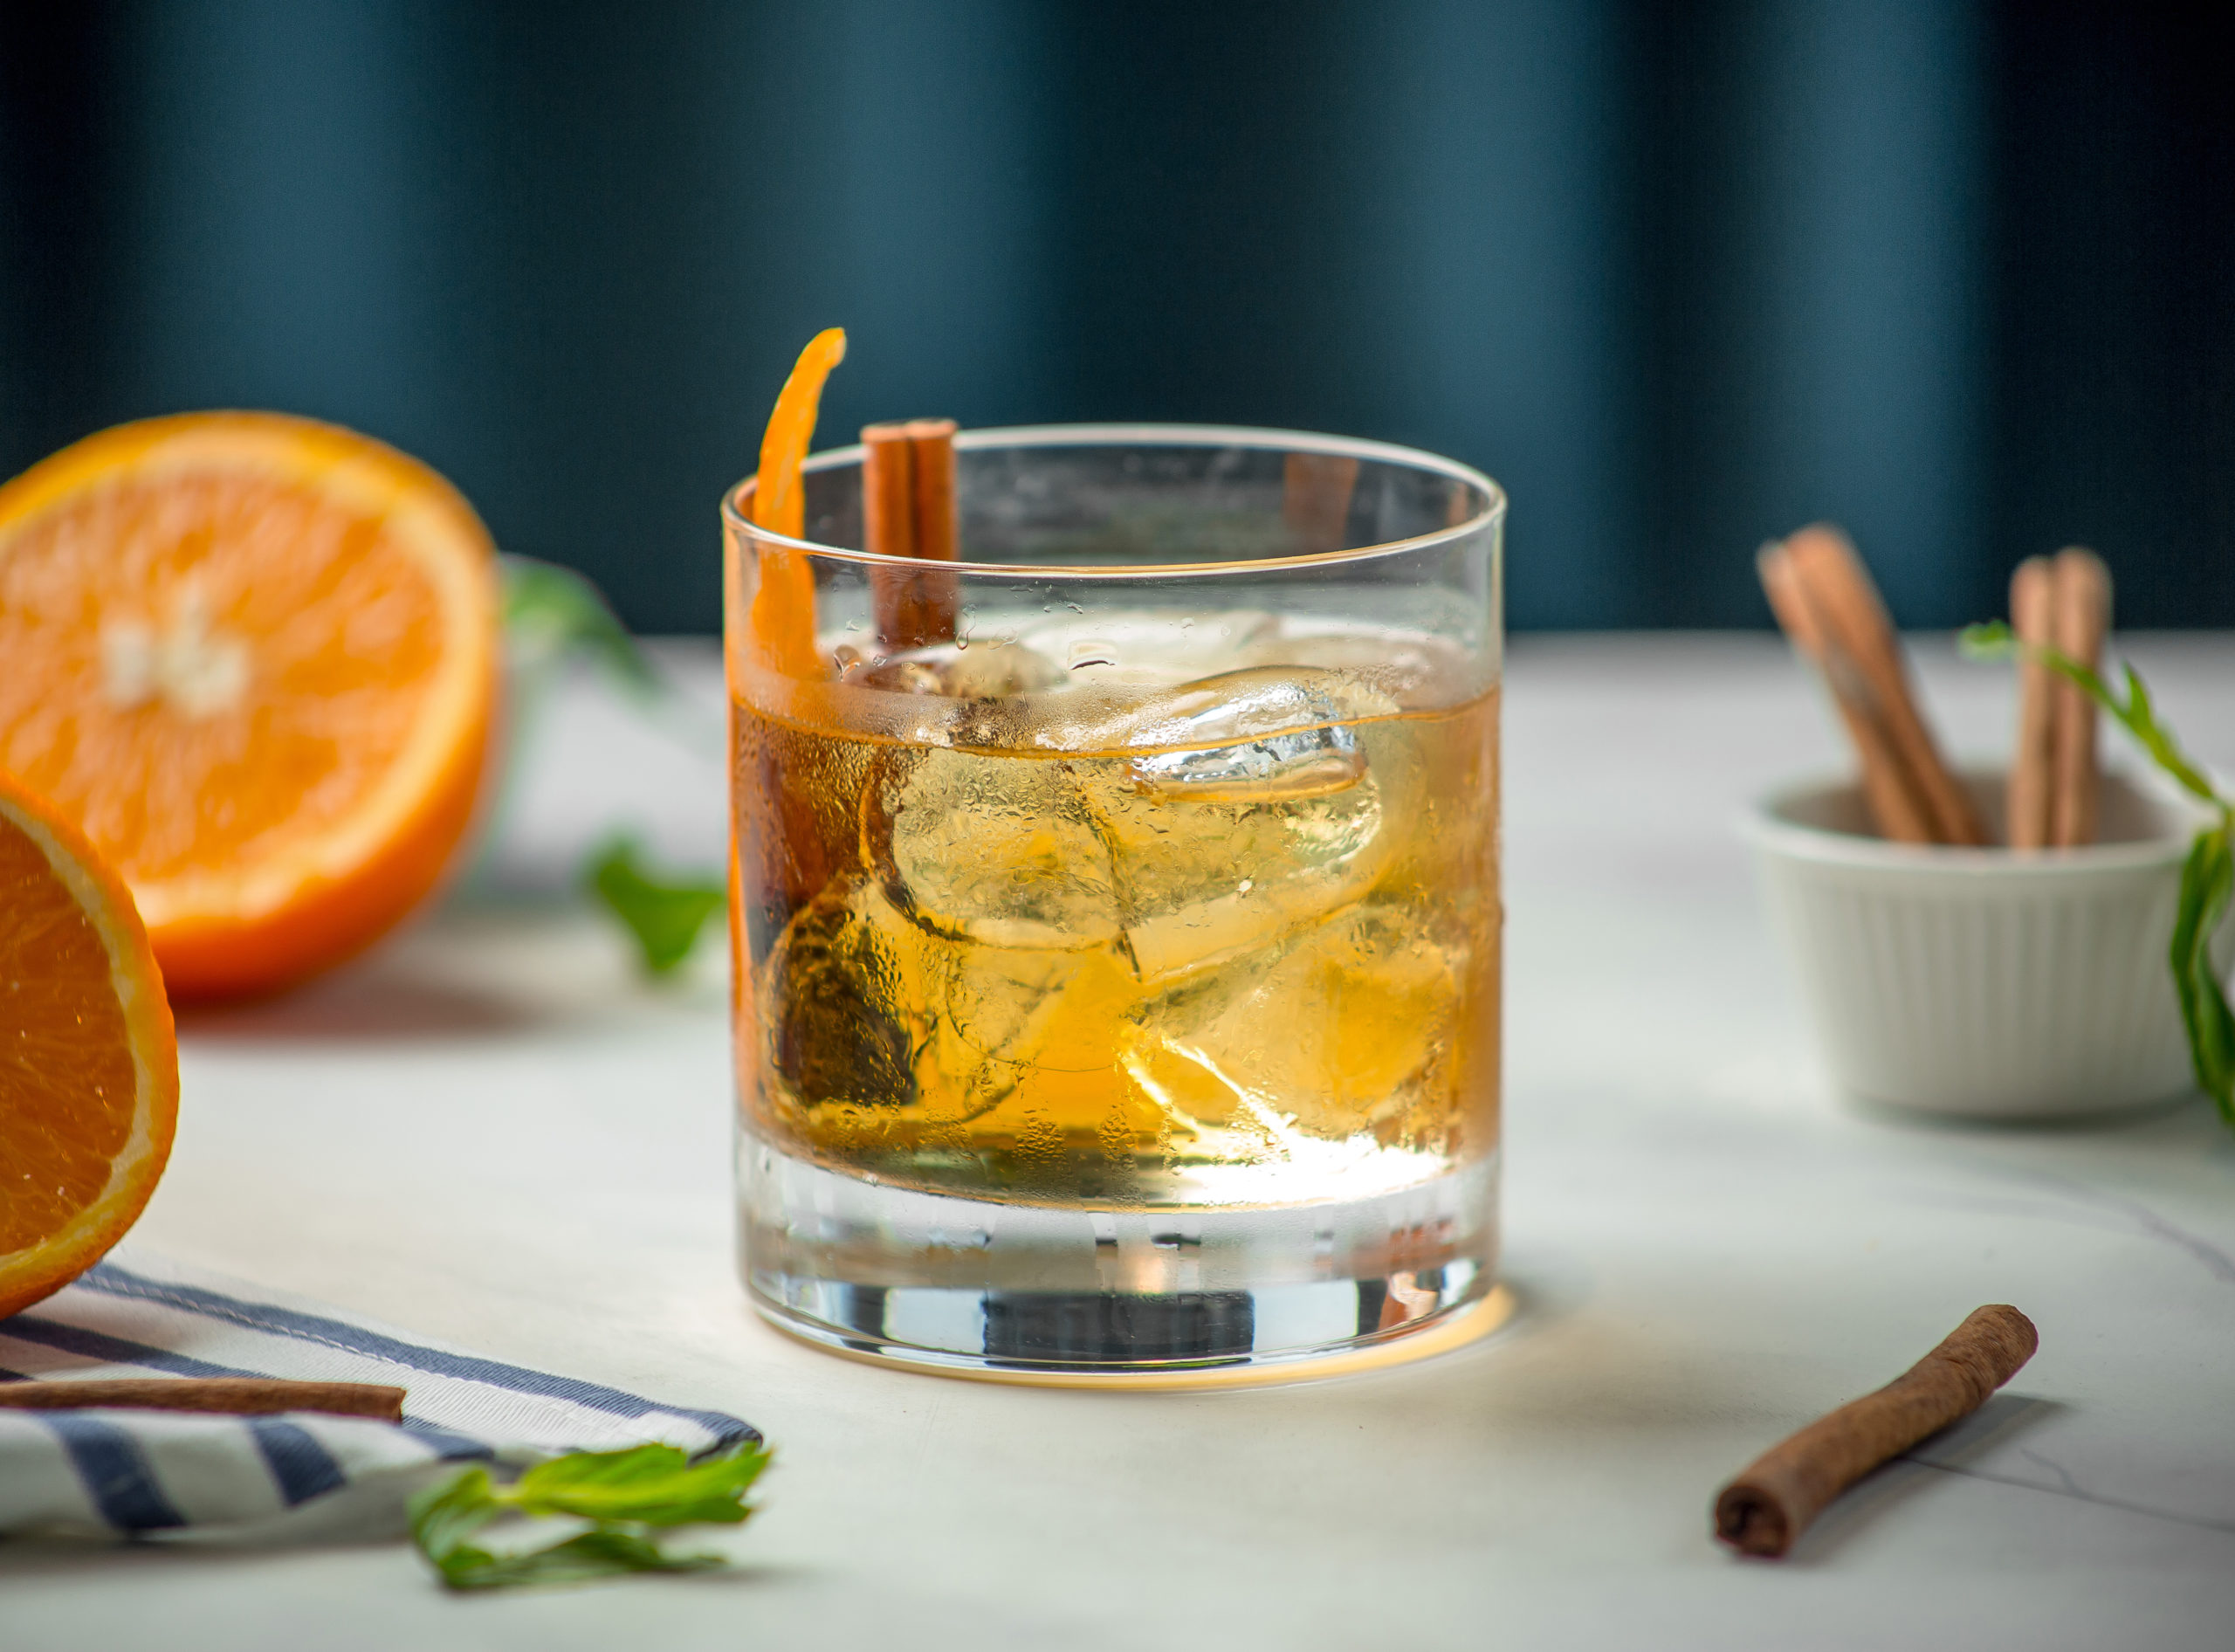 Whisky añejo, Canela y Naranja - Chefeel.com